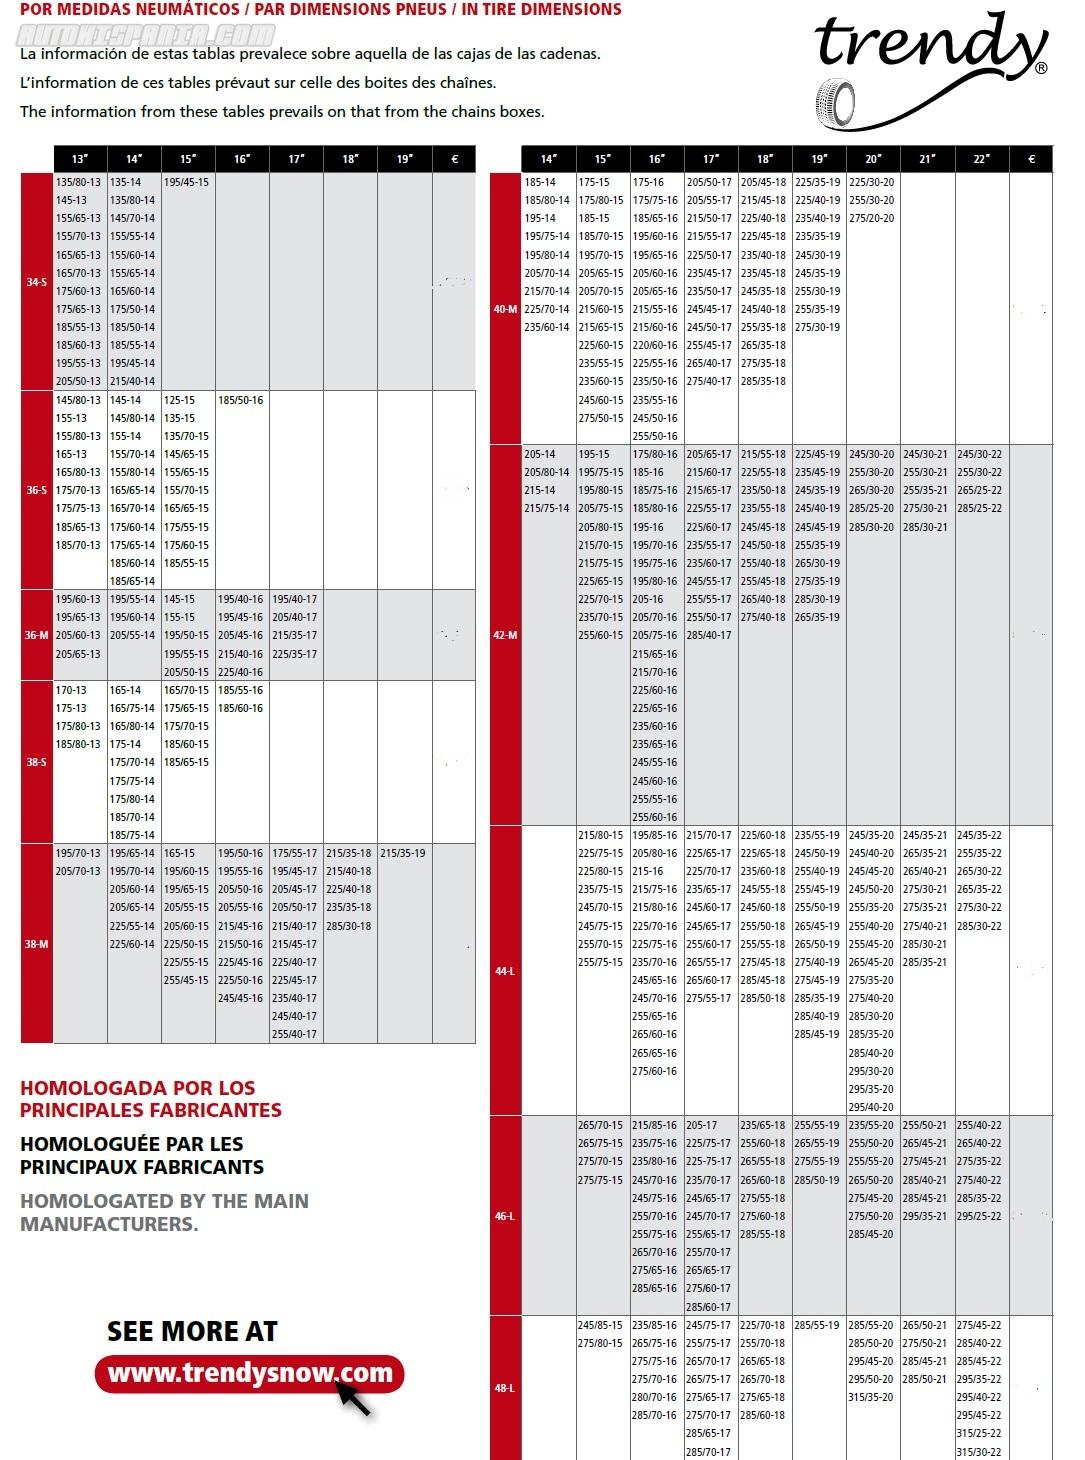 foro Peatonal Fanático Comprar Funda De Tela Trendy Talla 38-M a 90,00€ > Fundas trendy > Cadenas  nieve > Seguridad | www.AutoHispania.com tienda online